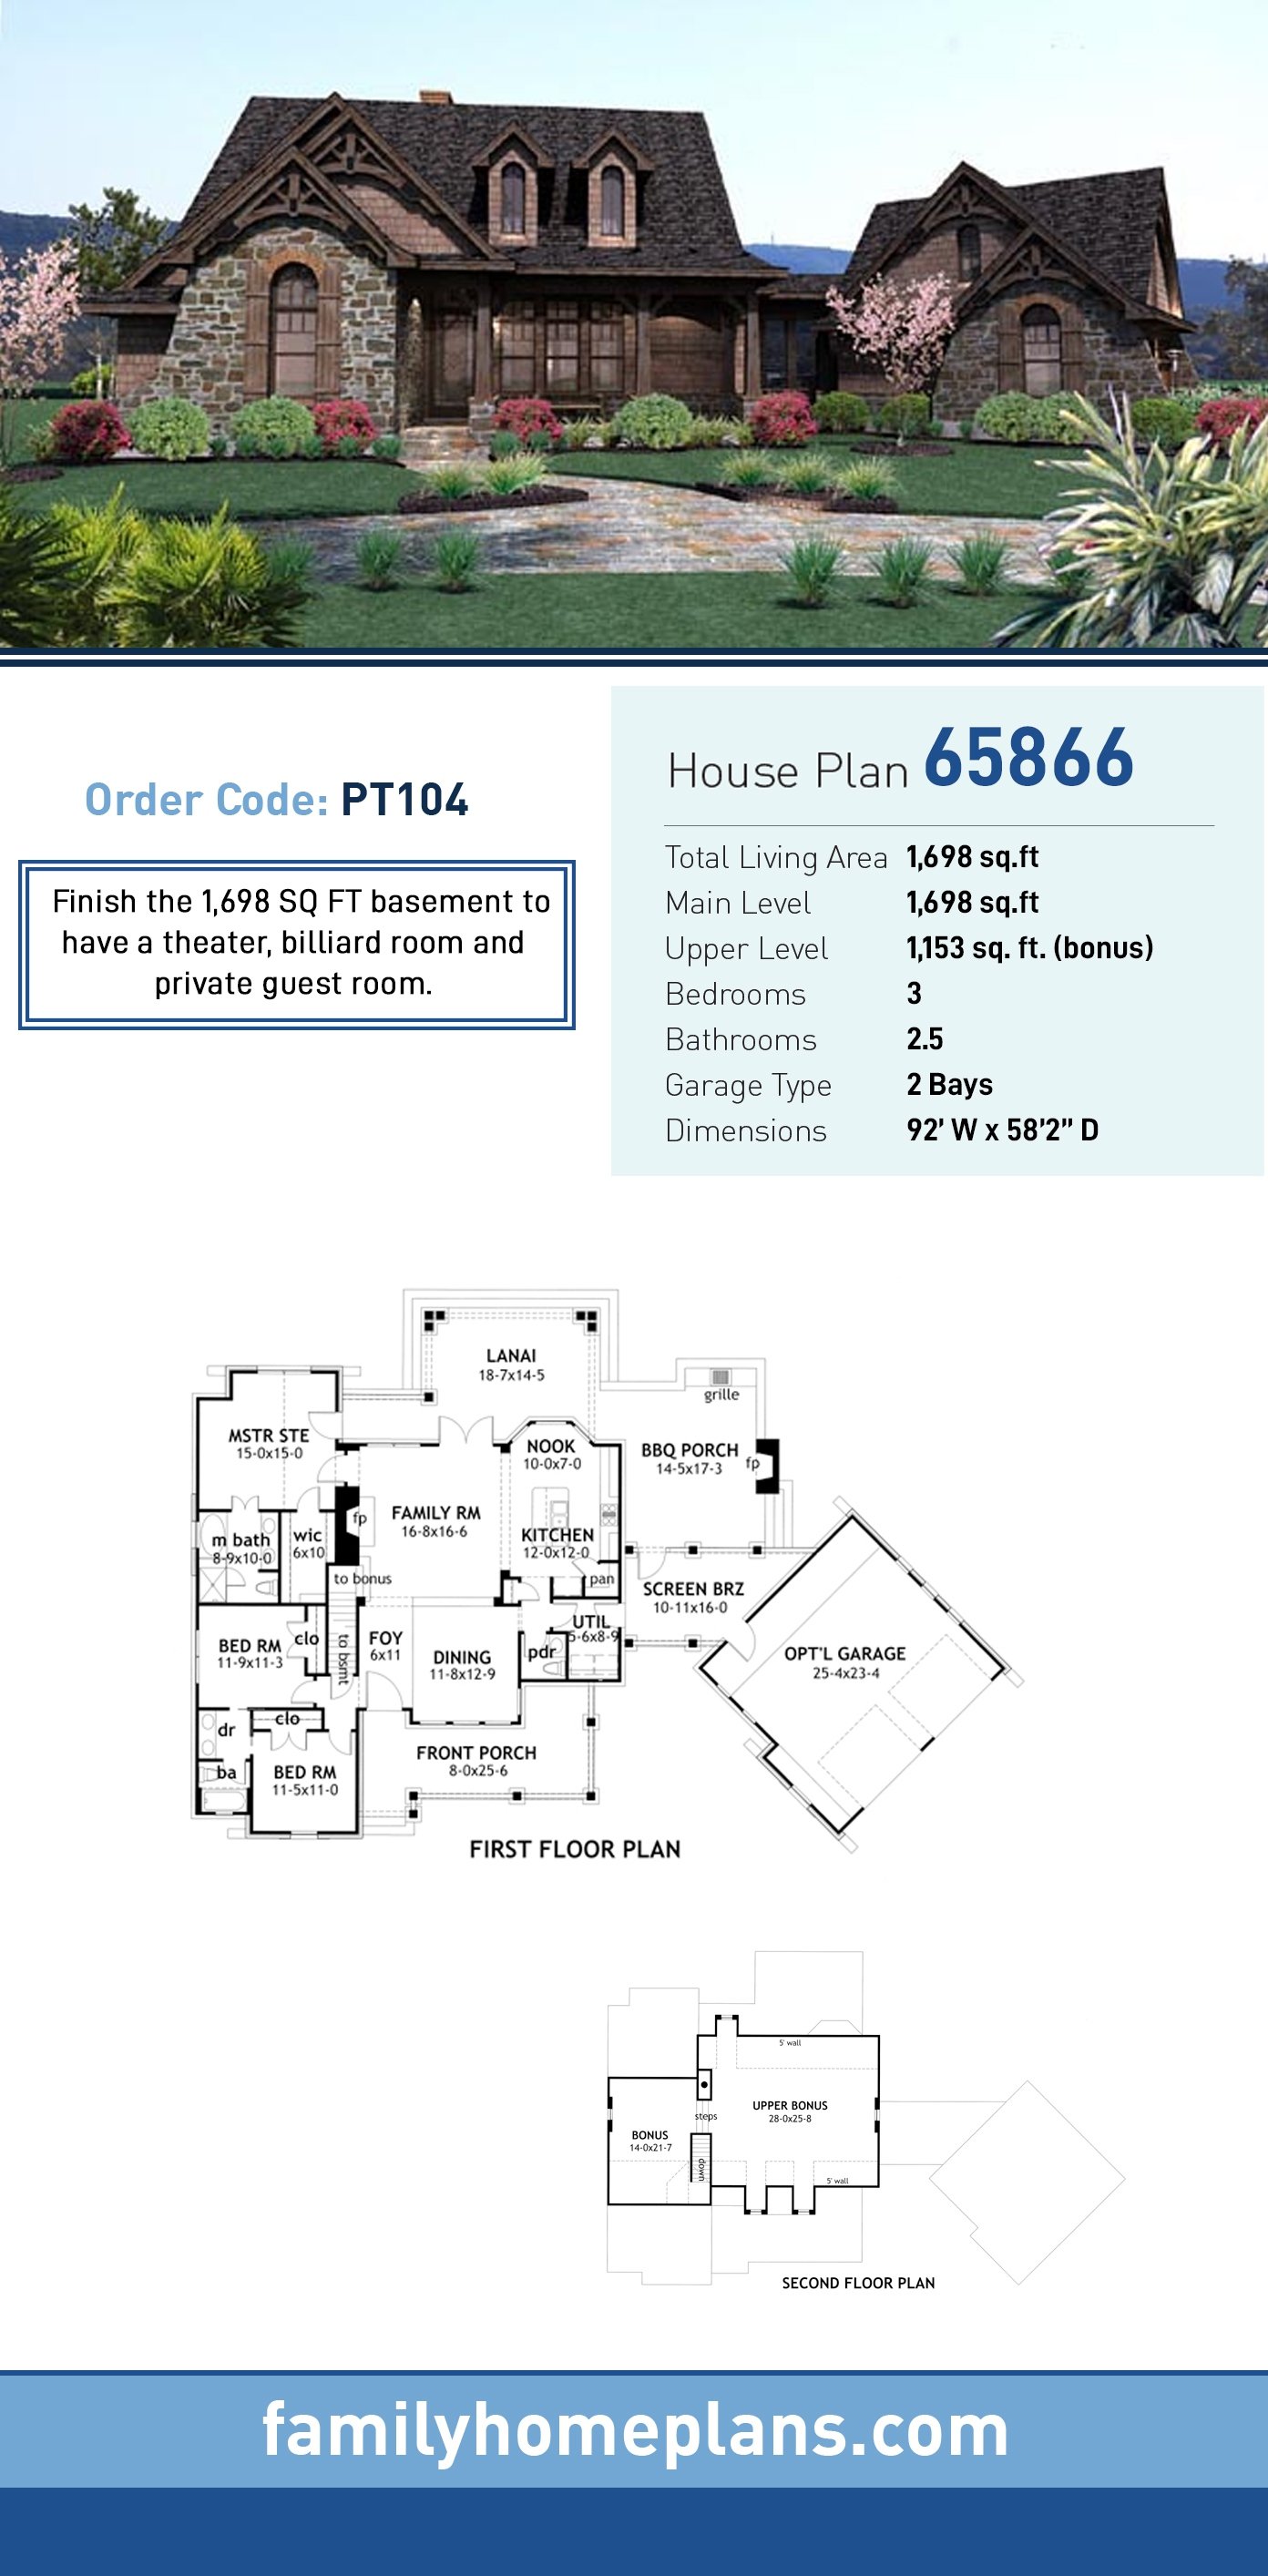 House Plan 65866